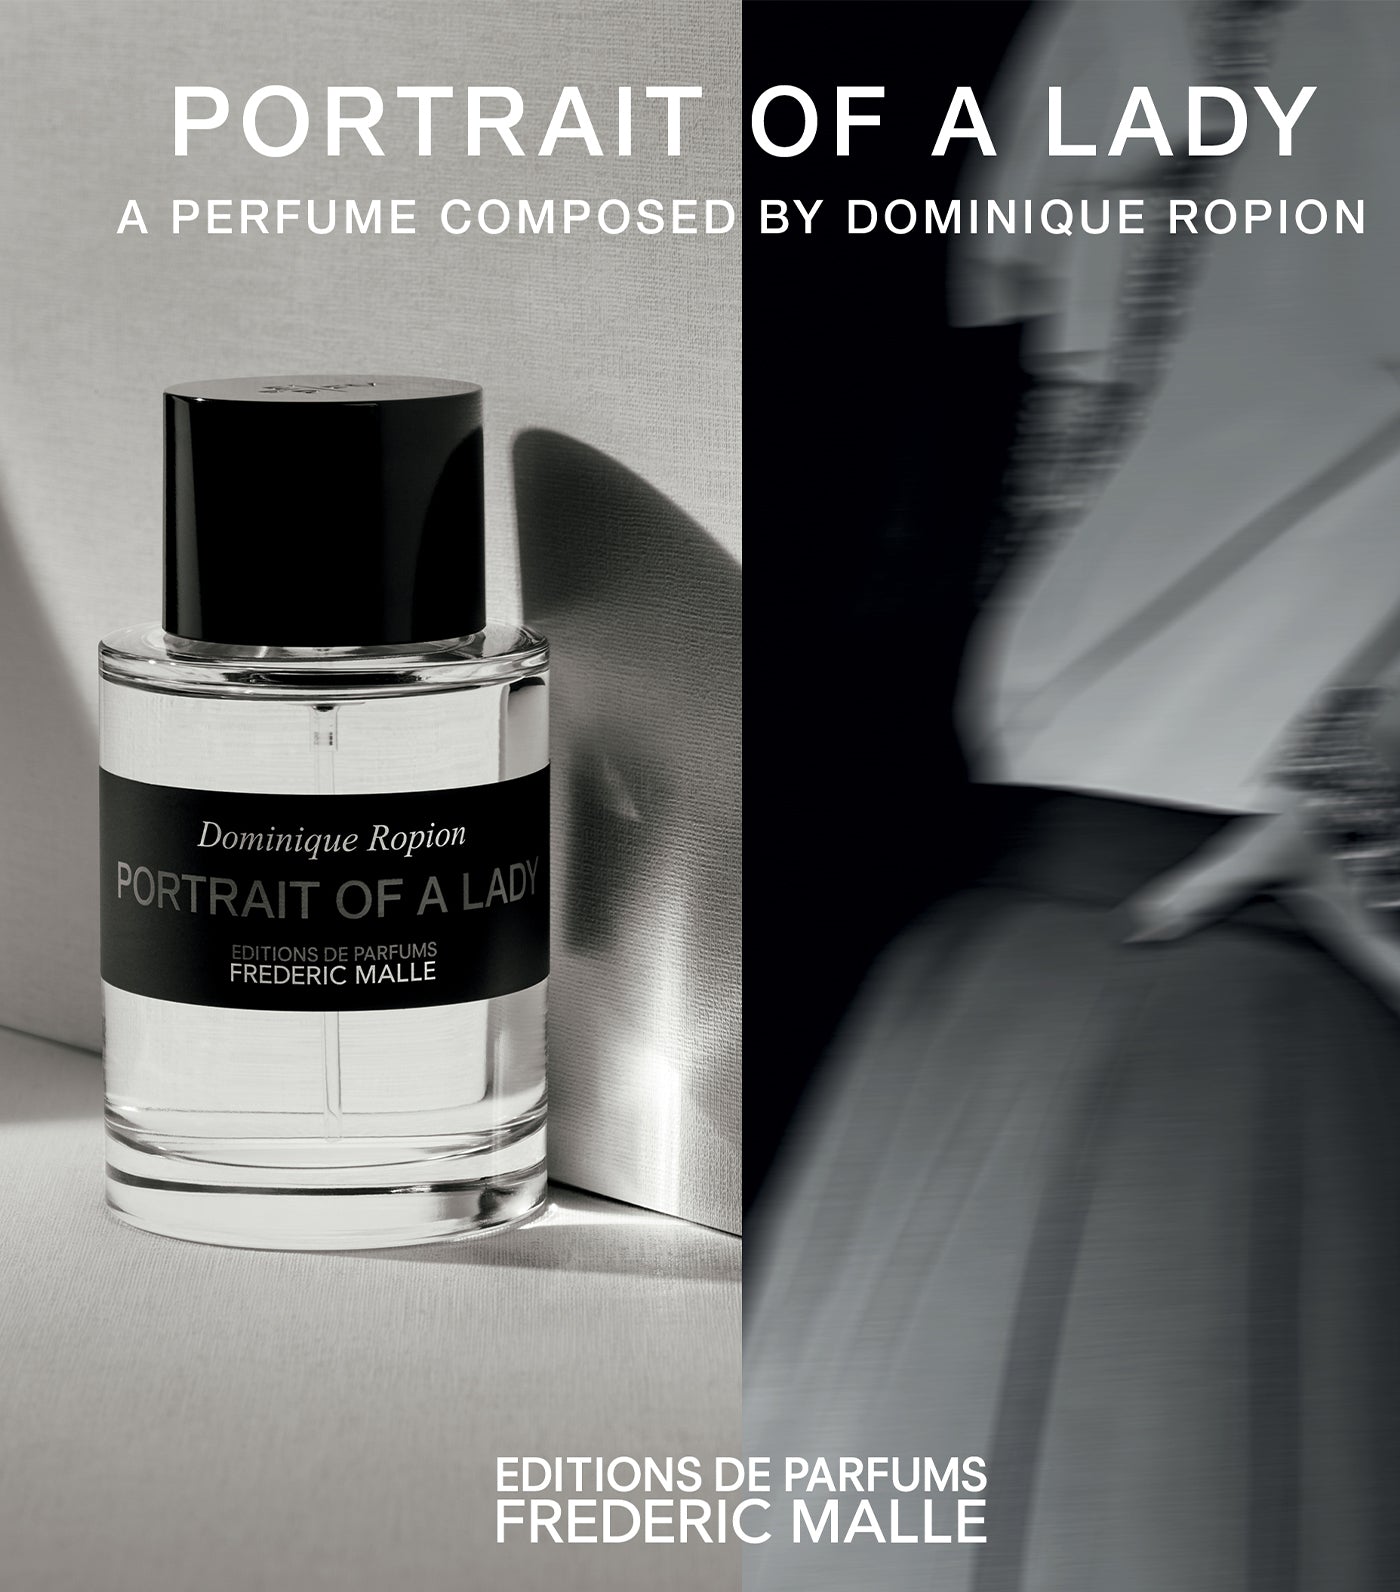 Portrait of a Lady Perfume by Dominique Ropion